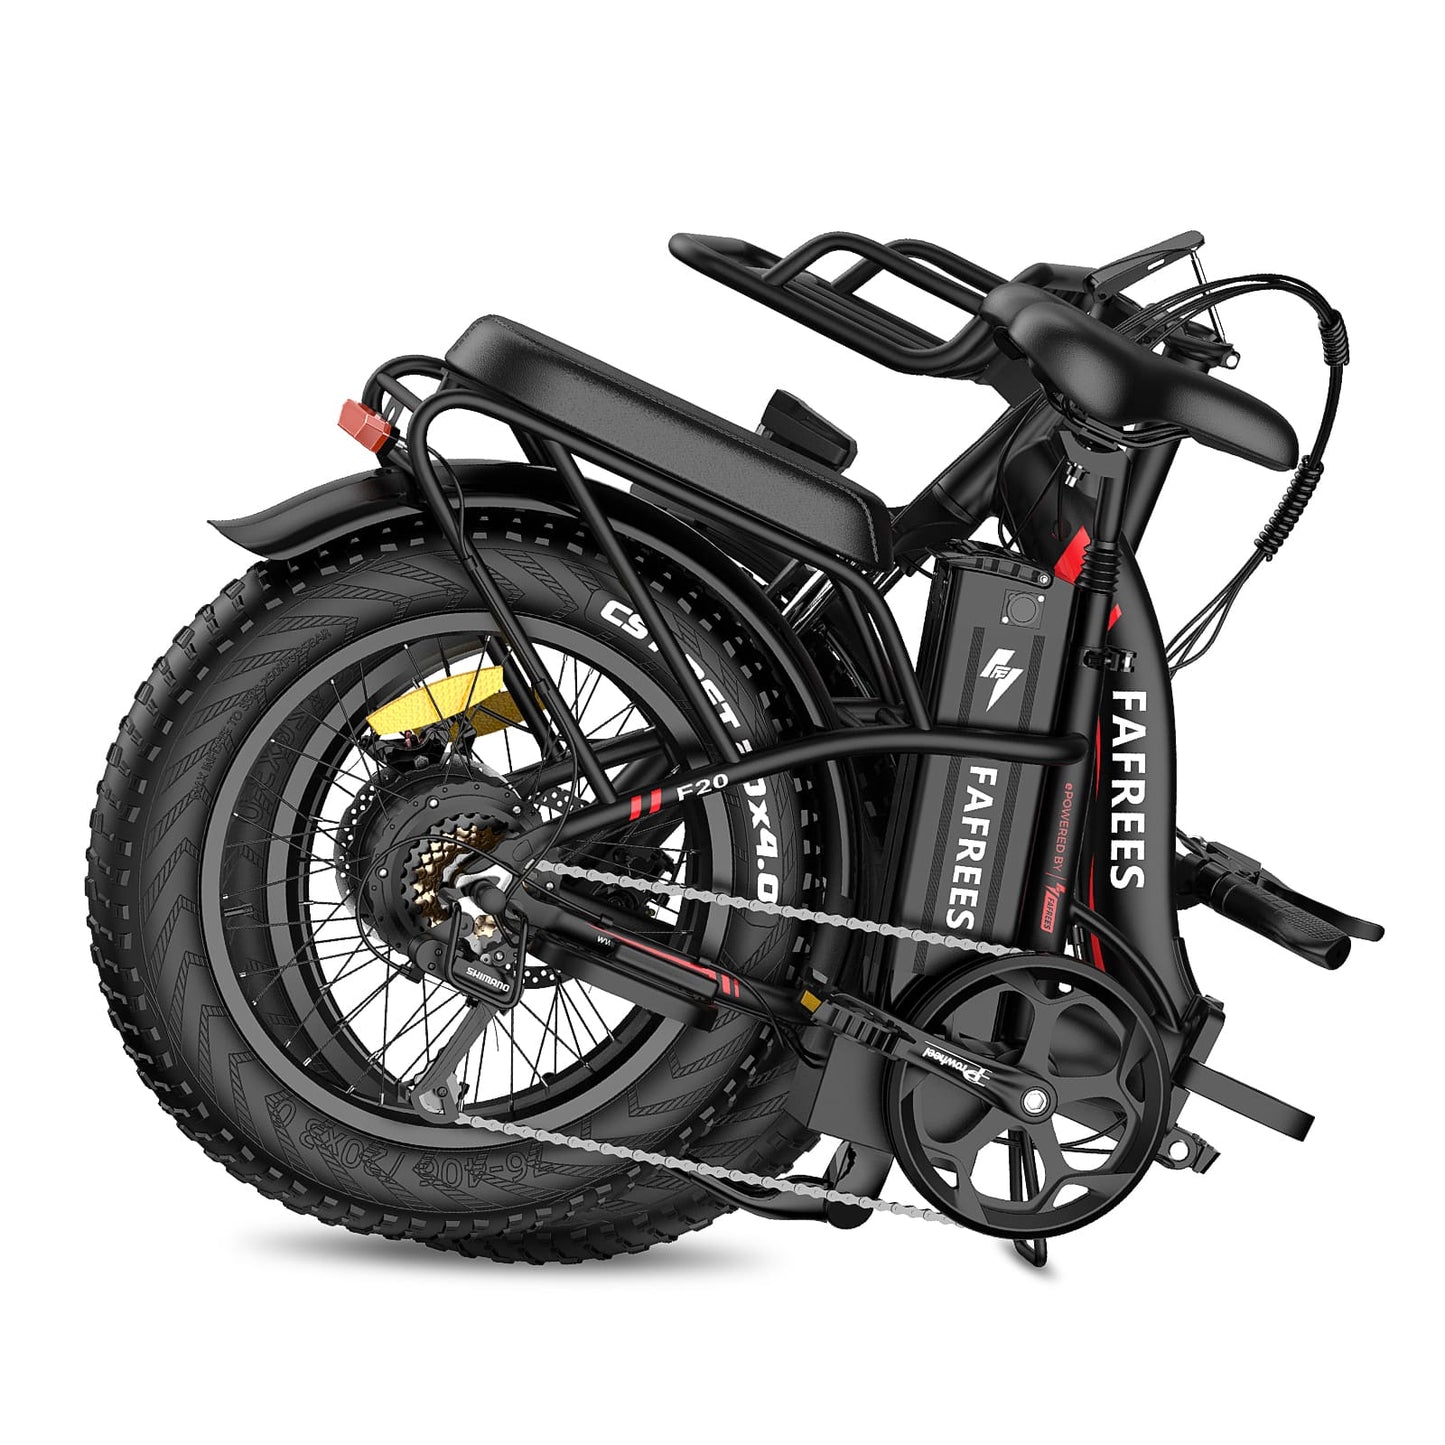 FAFREES F20 Max E-Bike 500W Faltbares elektrisches Citybike